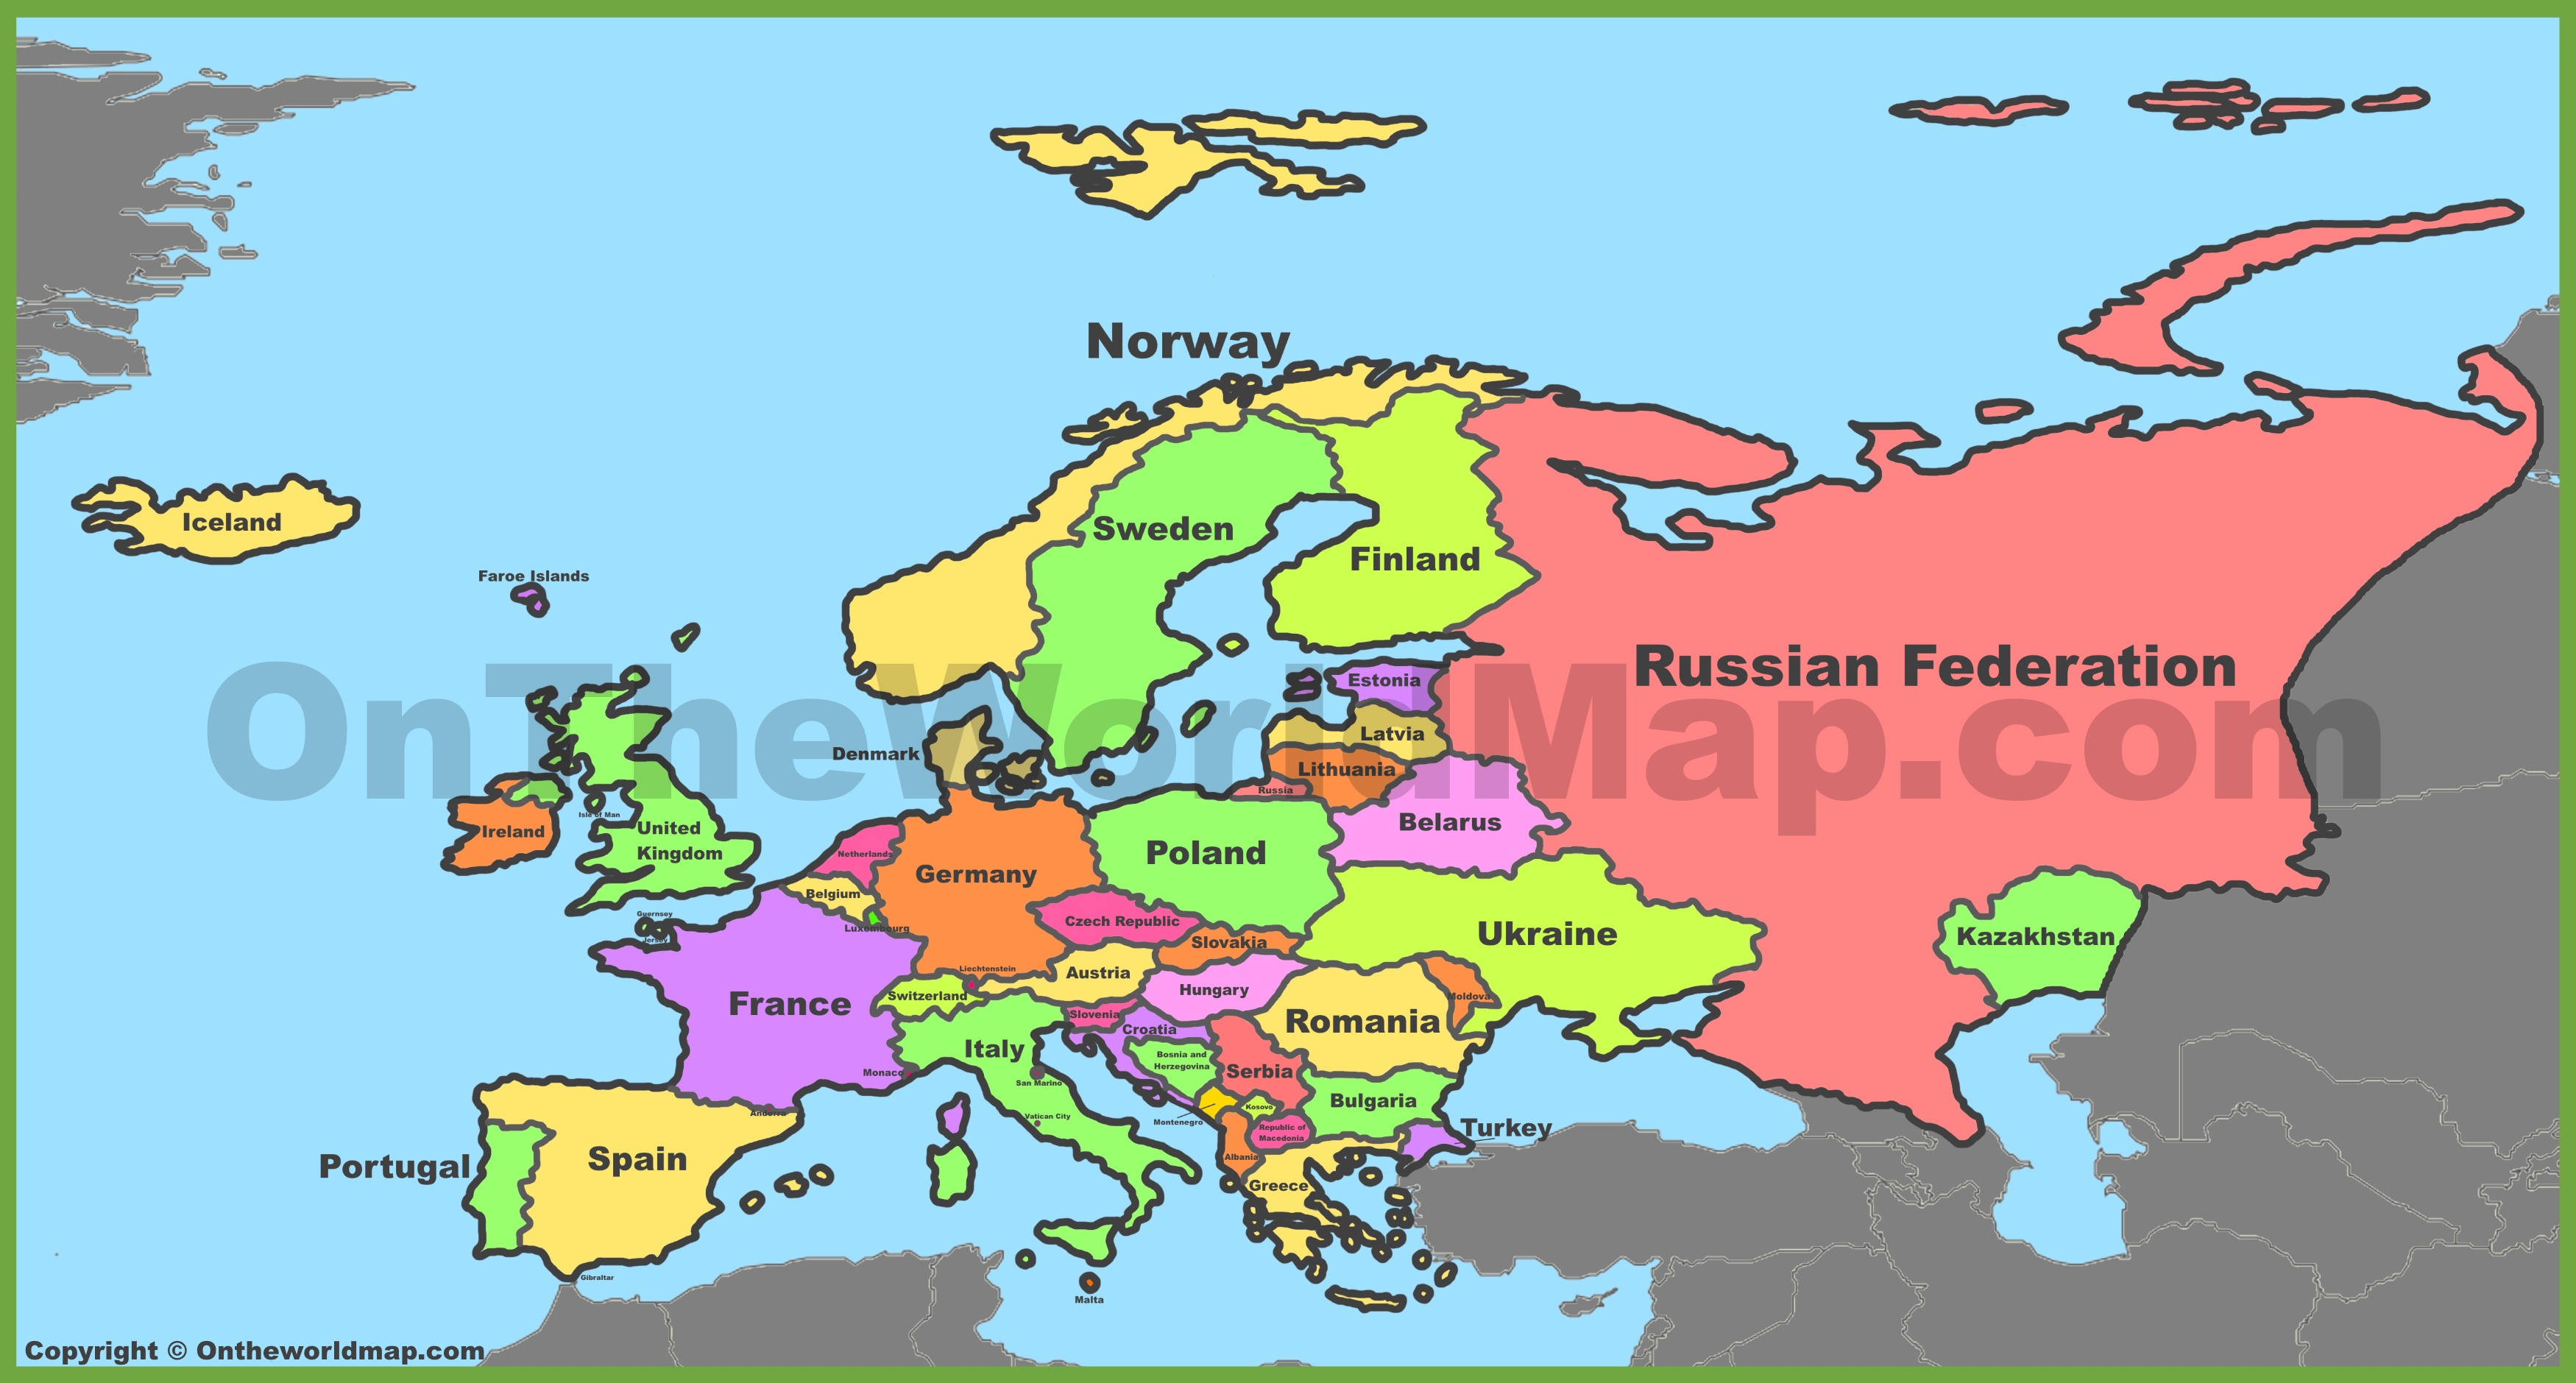 mapa_politico_de_europa_con_rusia_incluida